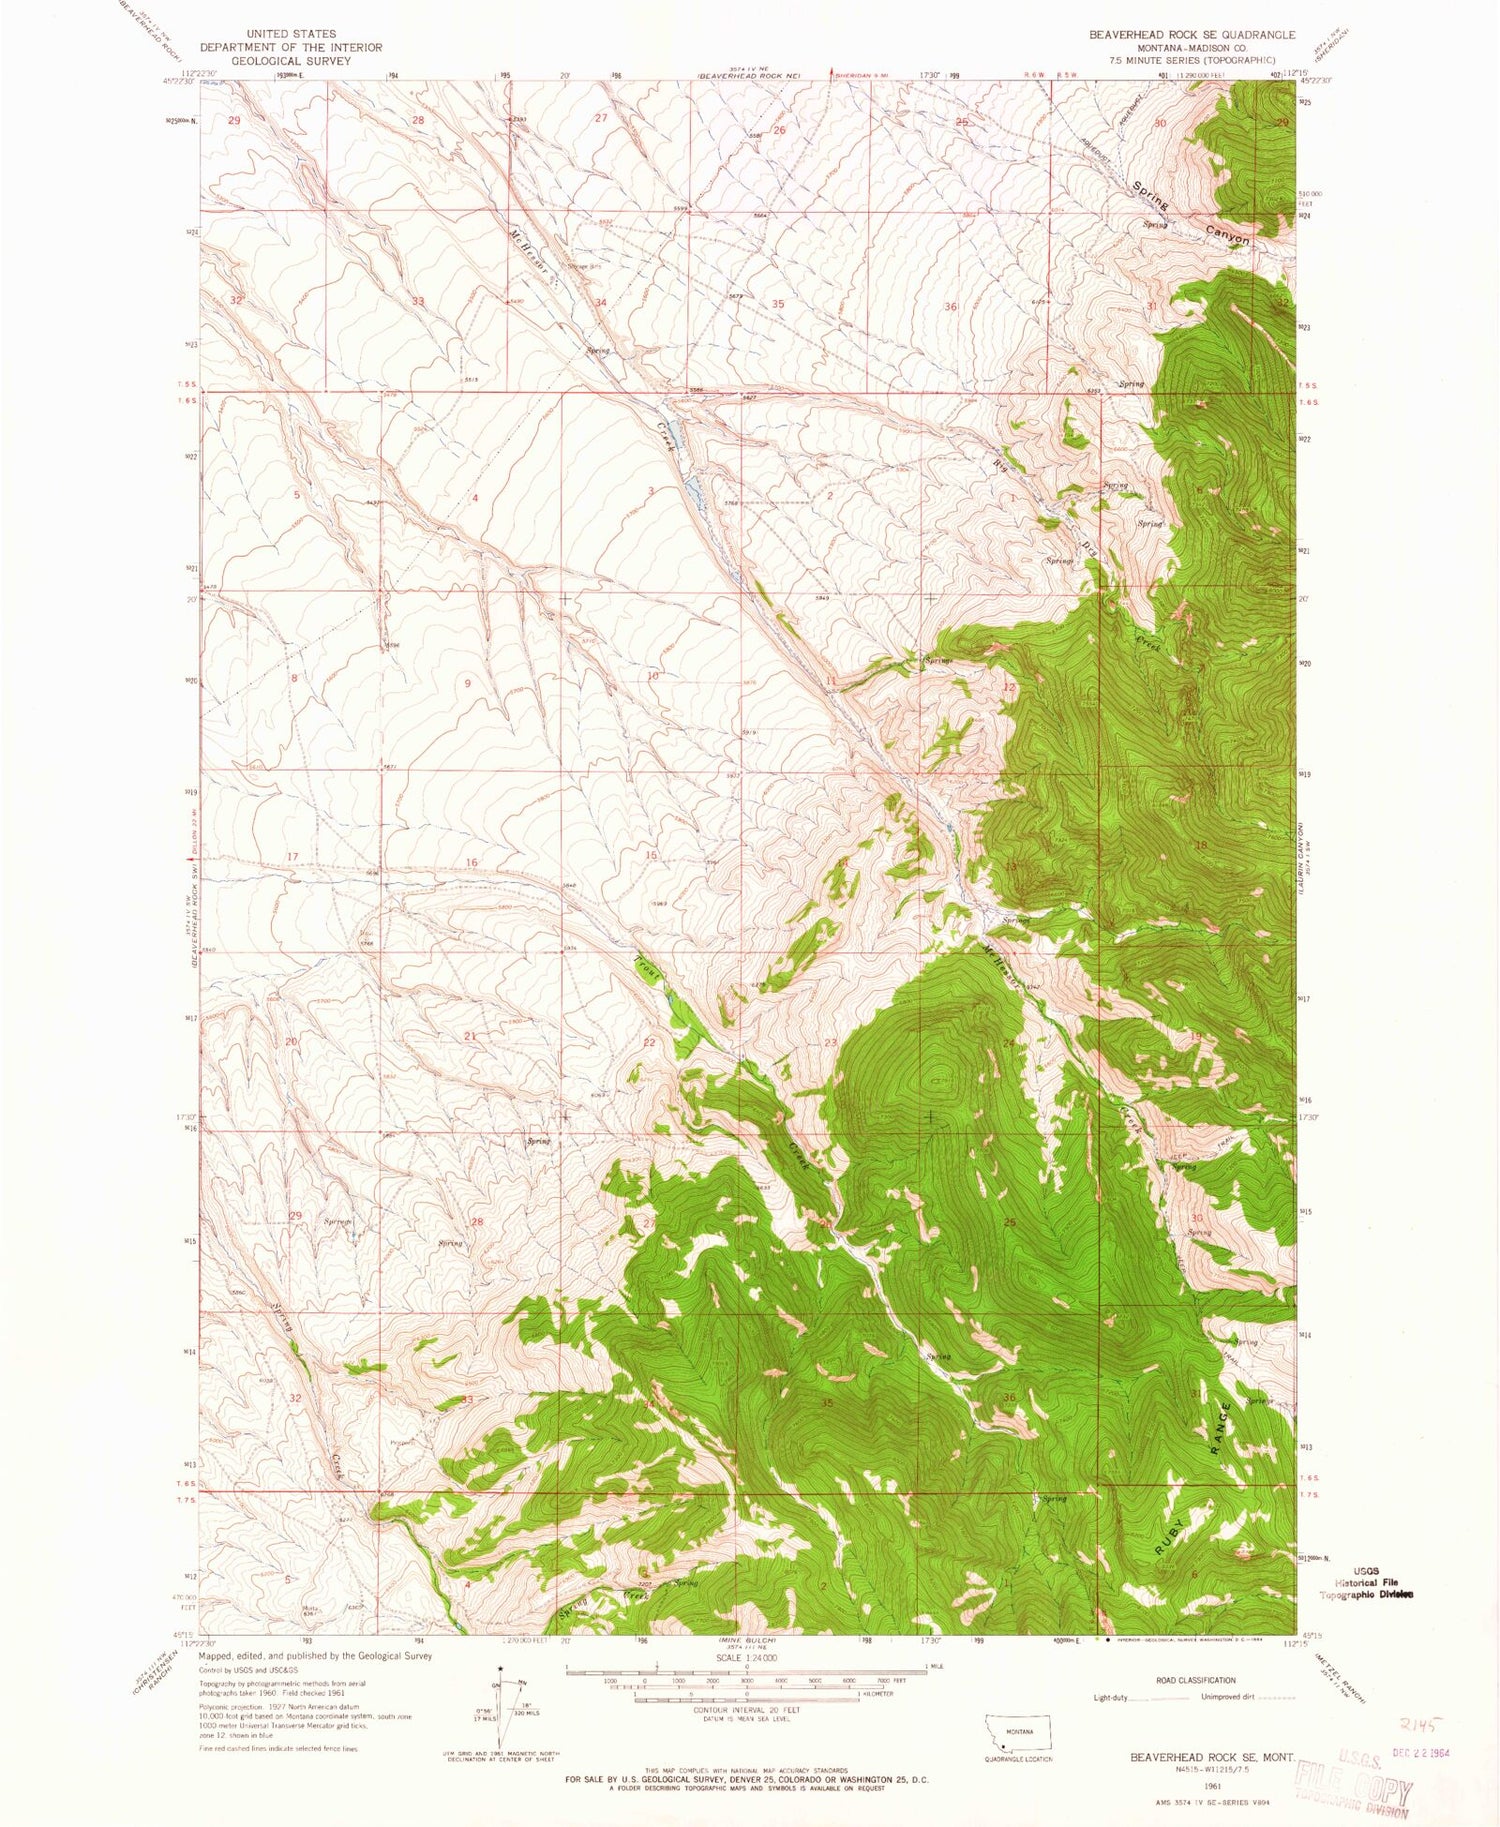 Classic USGS Beaverhead Rock SE Montana 7.5'x7.5' Topo Map Image